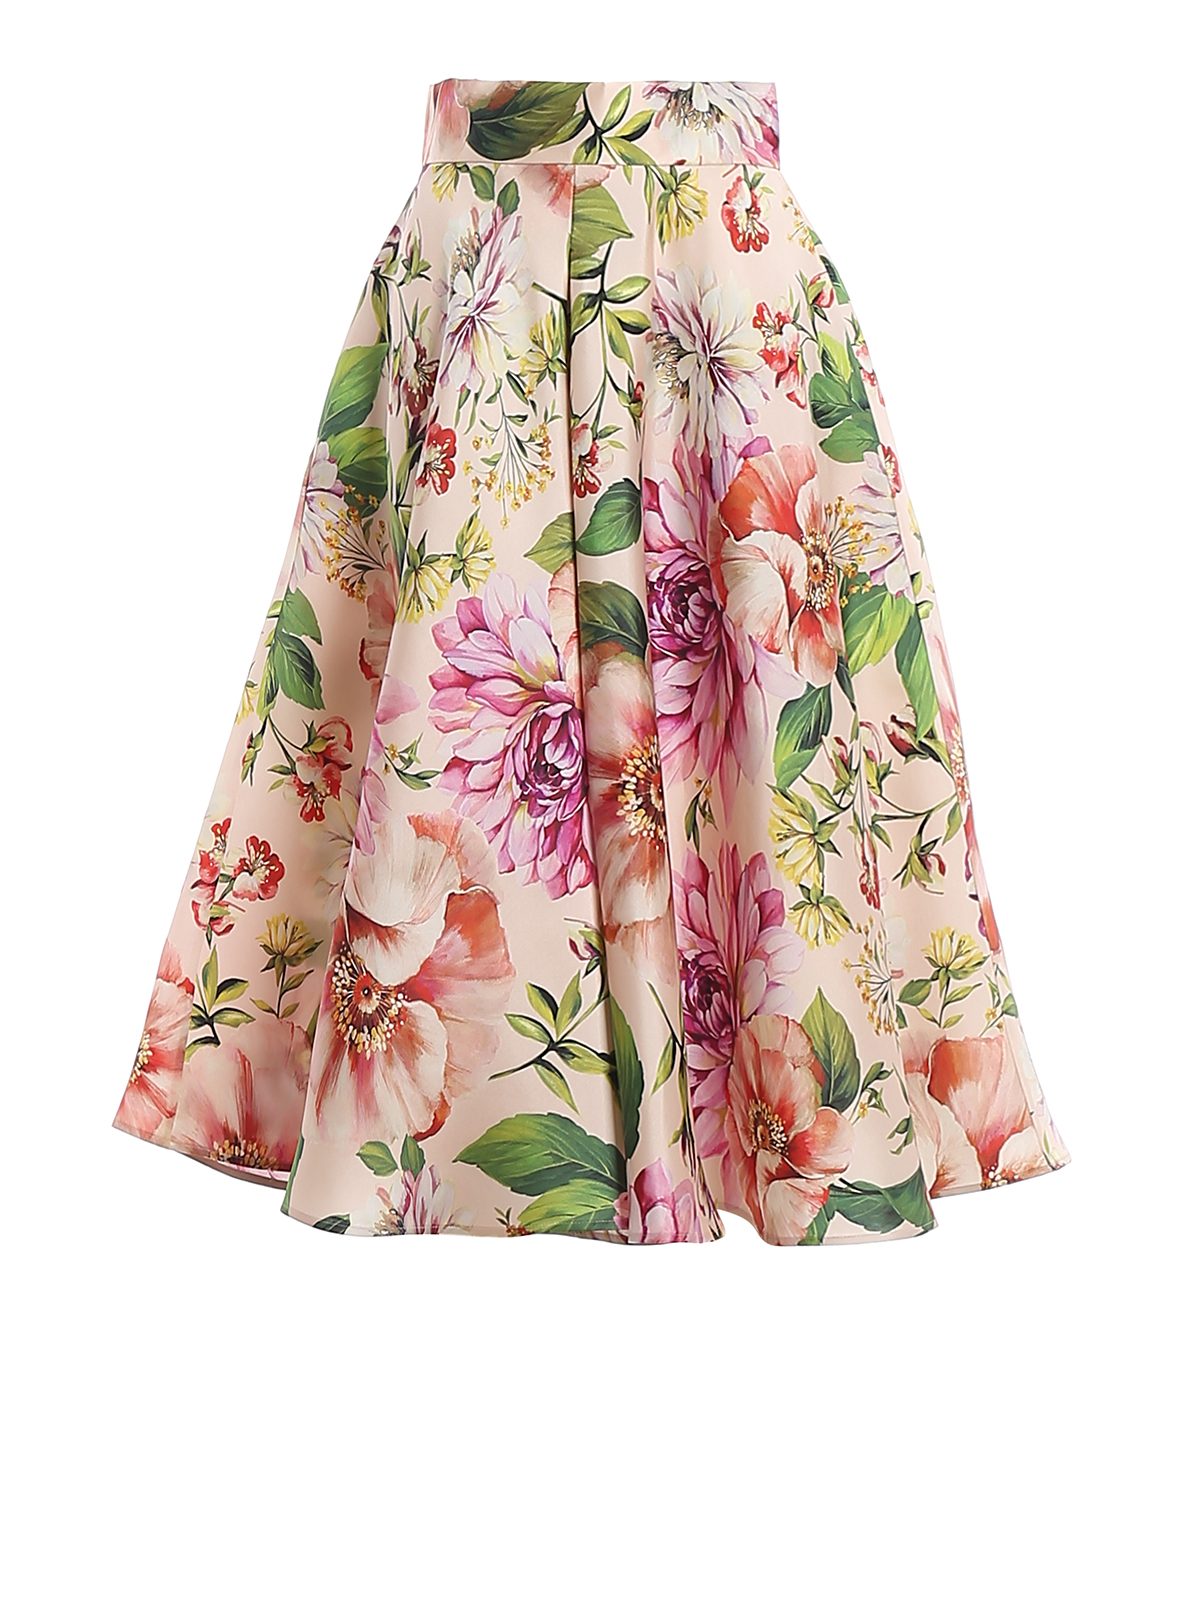 Dolce & Gabbana Silk Jacquard Floral Skirt Womens Clothing Skirts Knee-length skirts 